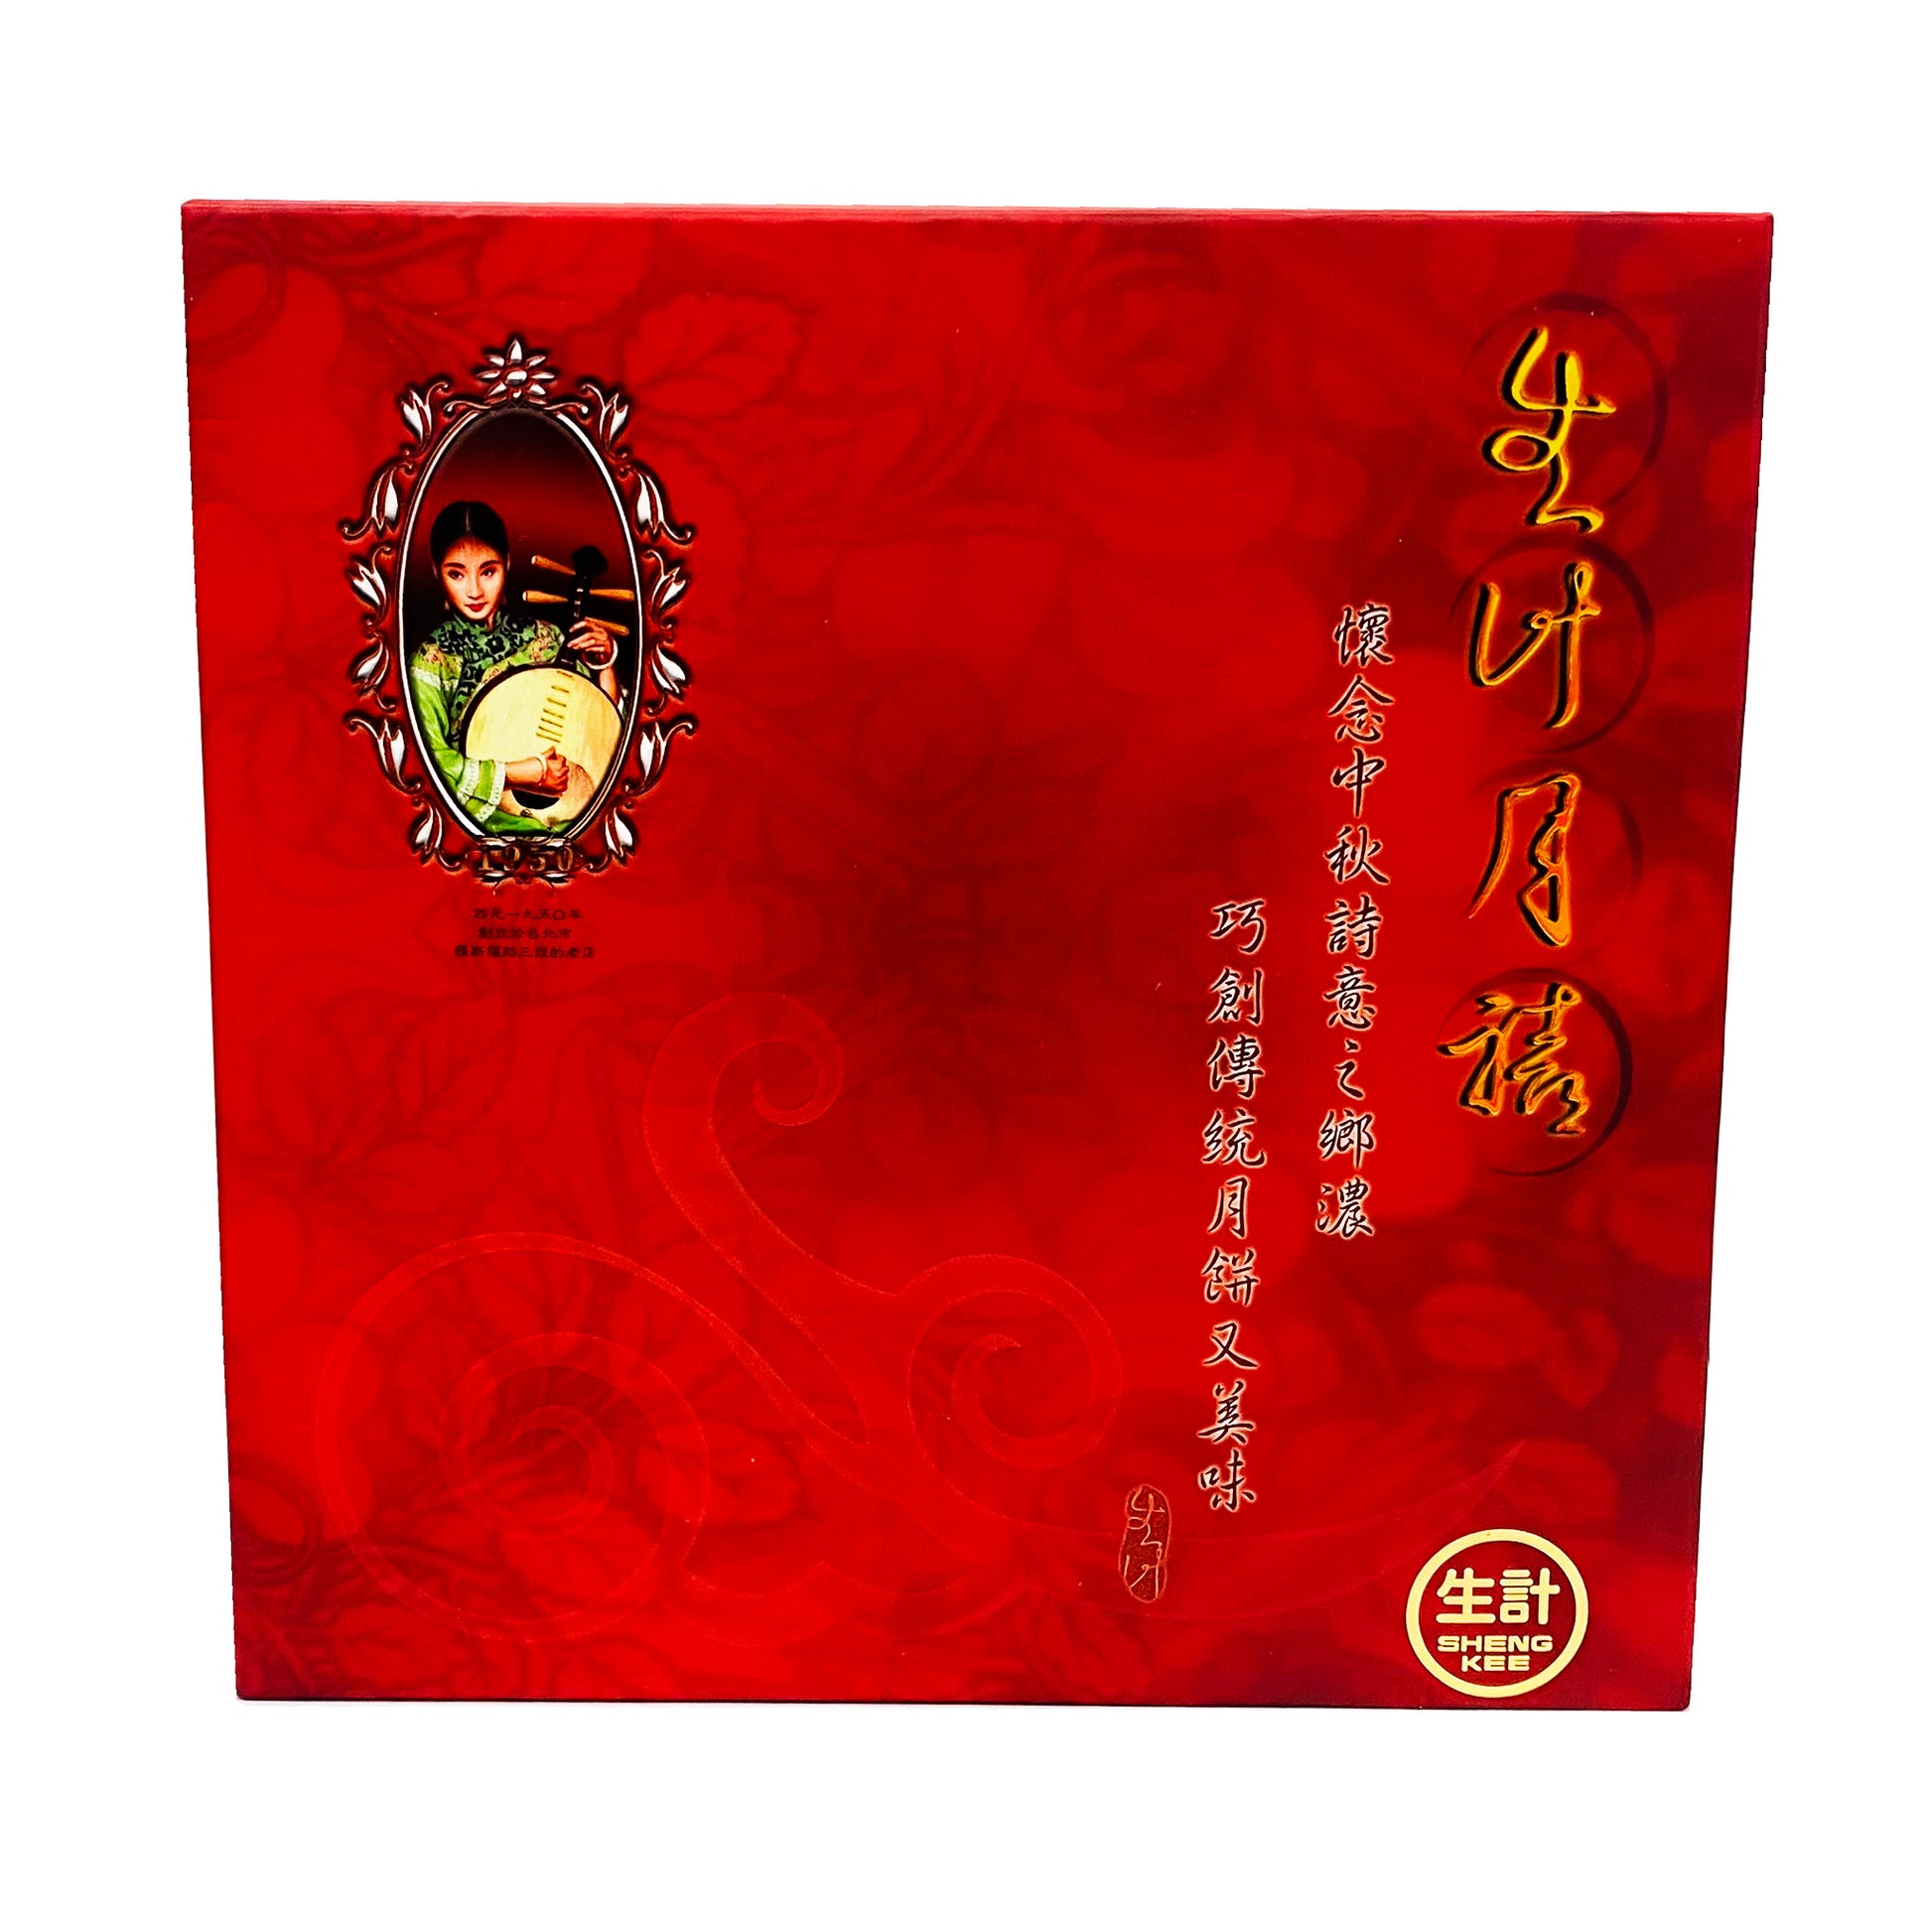 Front graphic image of Sheng Kee Assorted Mini Mooncake 9pcs - 3 Flavors 19.4oz (549g) - 生计 三色小月饼 9粒 19.4oz (549g) 